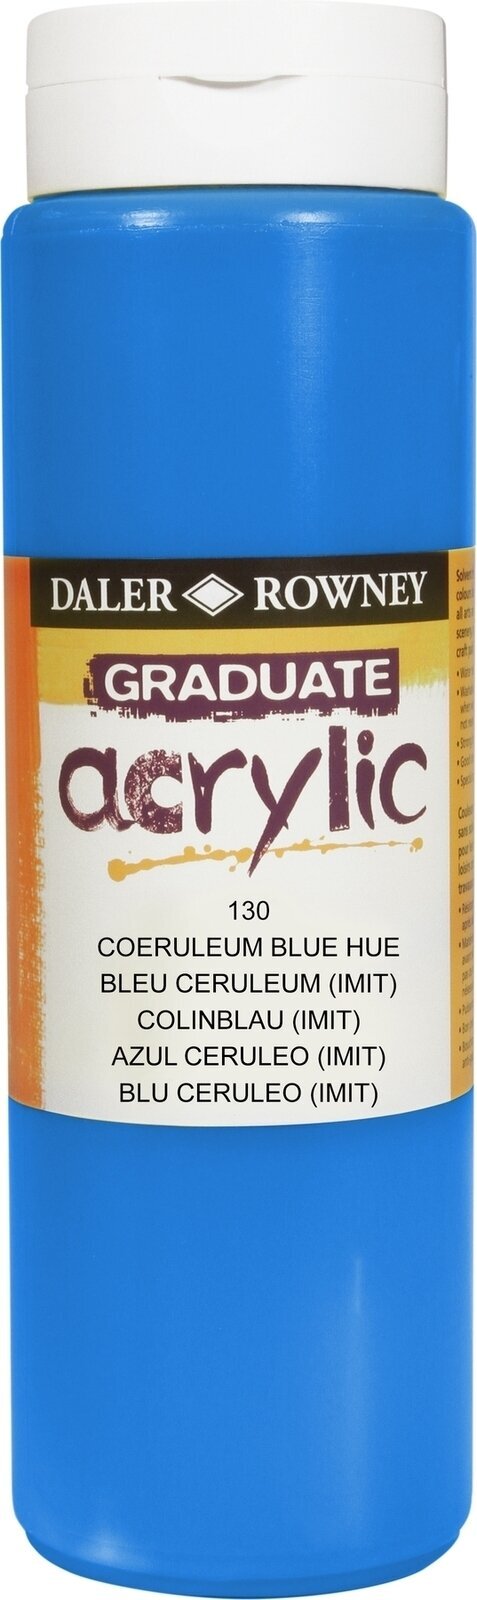 Akrylmaling Daler Rowney Graduate Akrylmaling Coeruleum Blue Hue 500 ml 1 stk.